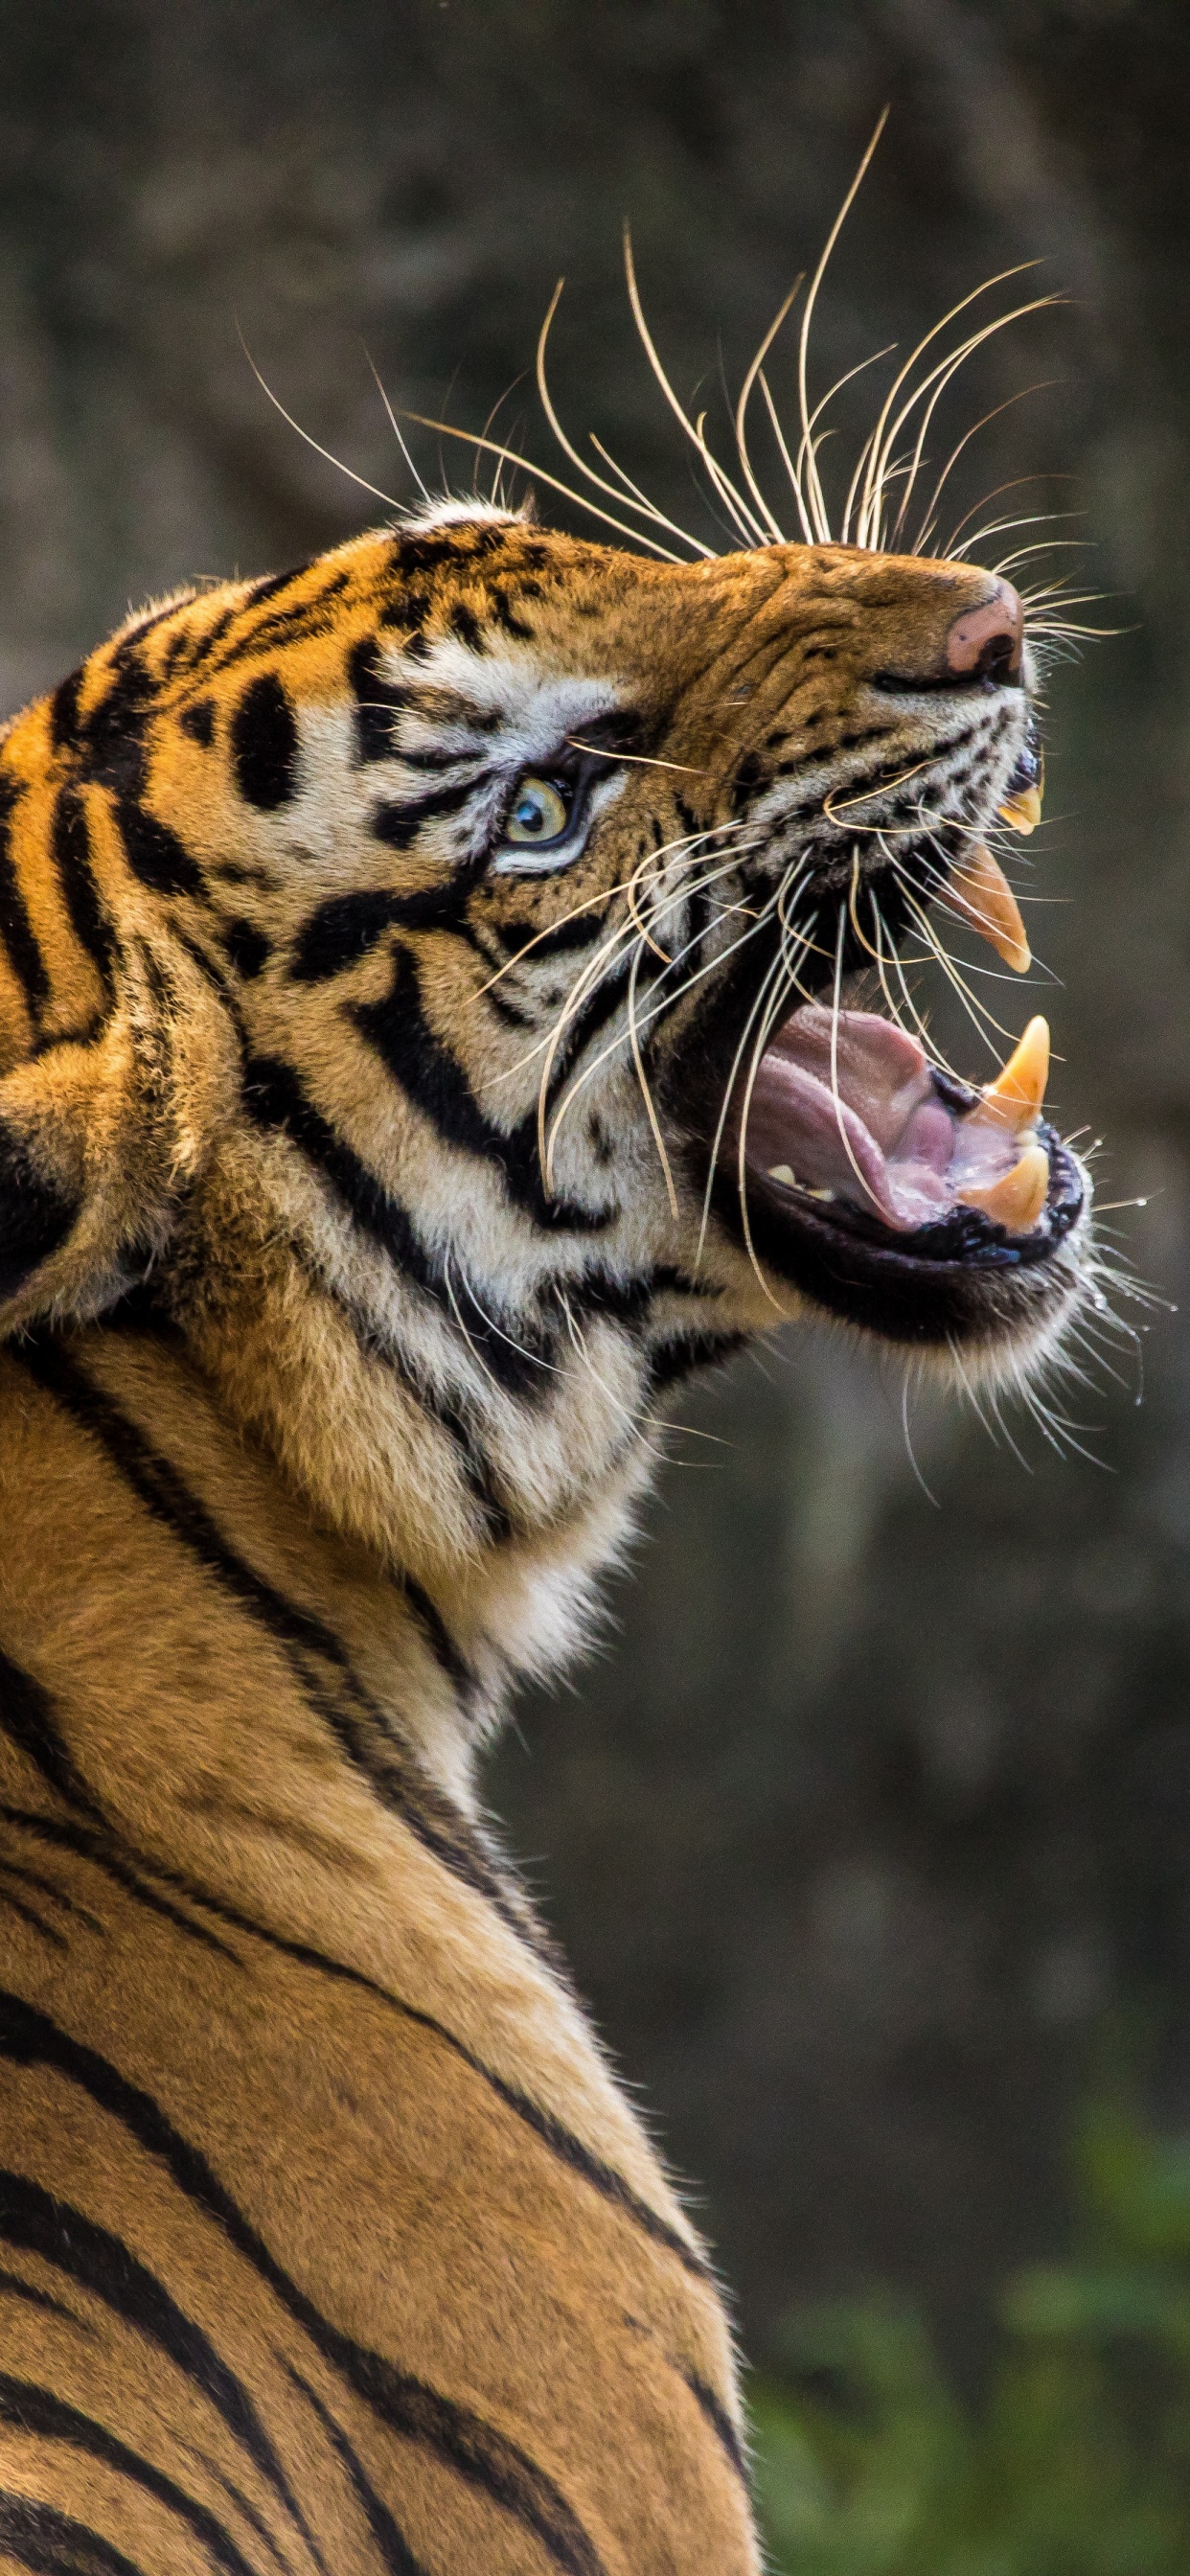 Tiger Wallpaper 4K, Roaring, Big cat, Wild animal, Predator, Closeup